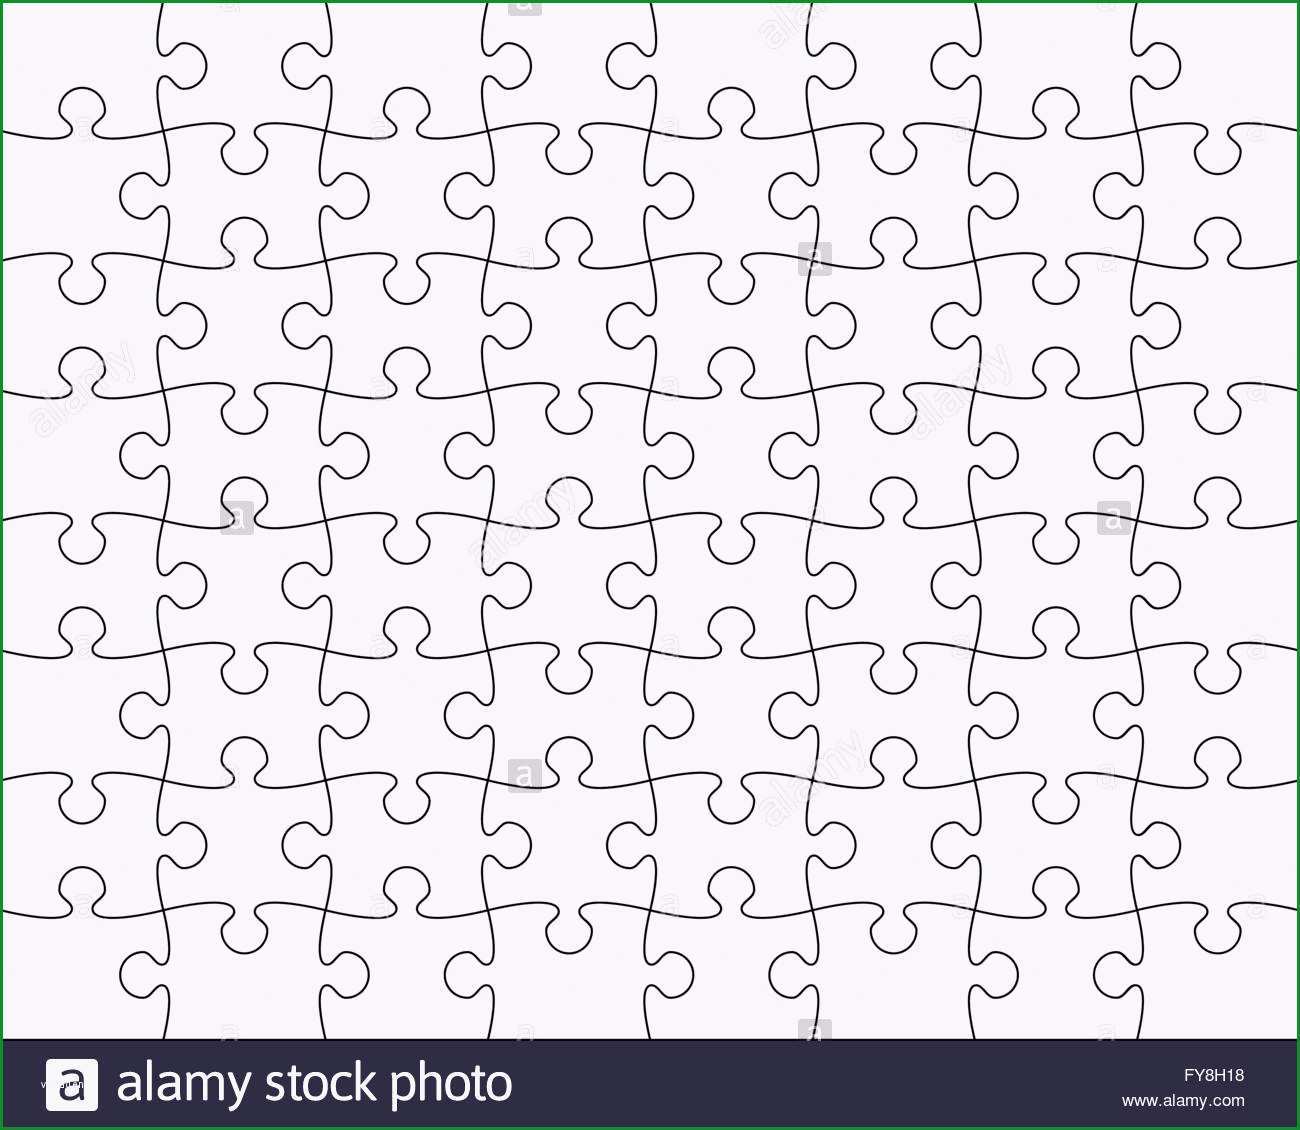 stockfoto jigsaw puzzle vorlage bearbeitbare mischung vektor illustration